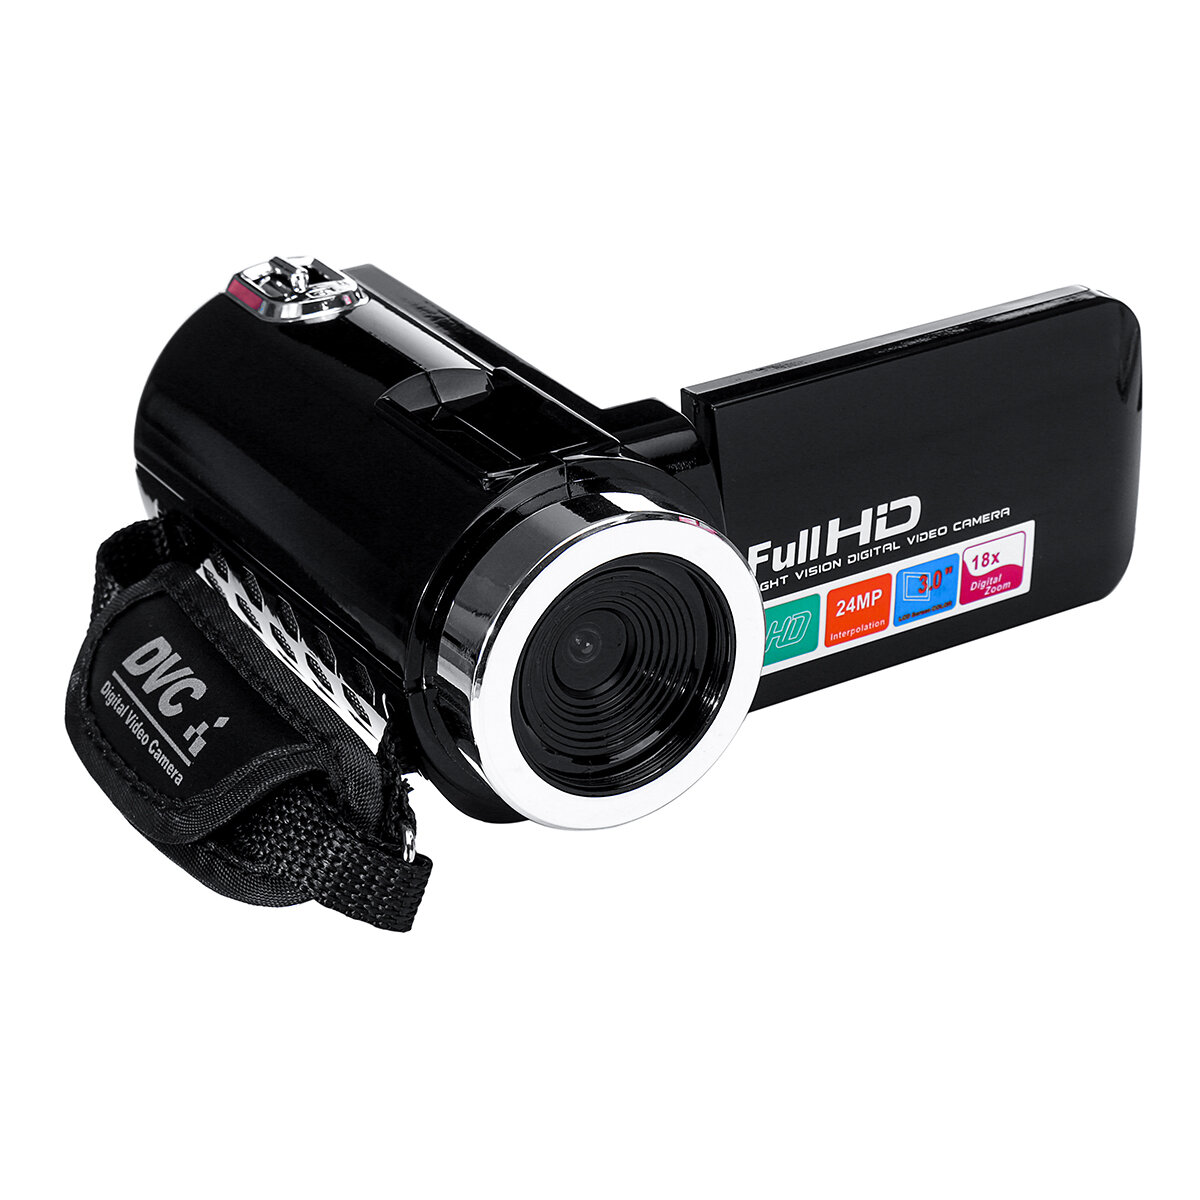 4k full hd 1080p 24mp 18x zoom 3 inch lcd digital camcorder video dv camera 5.0mp cmos sensor for youtube vlogging